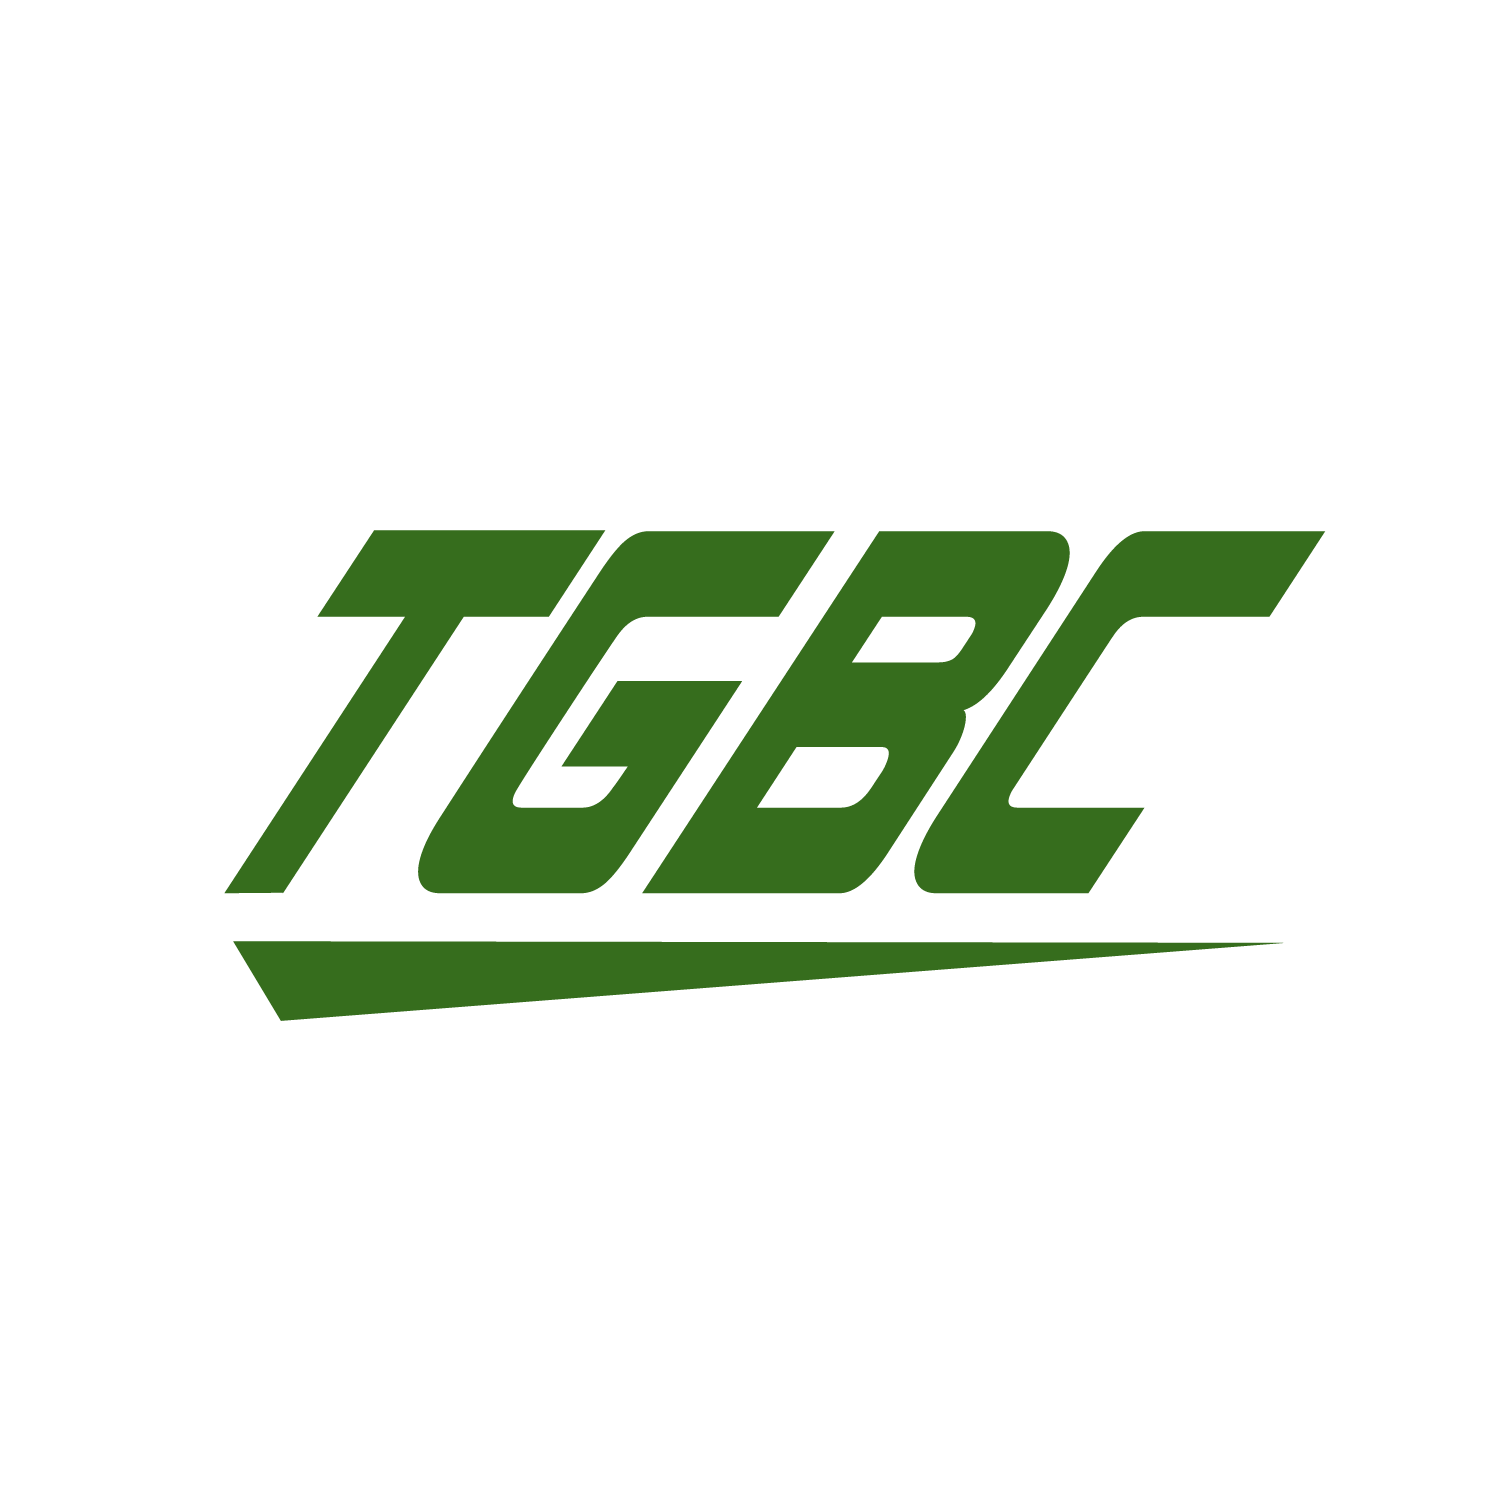 TGBC logo (GREEN)